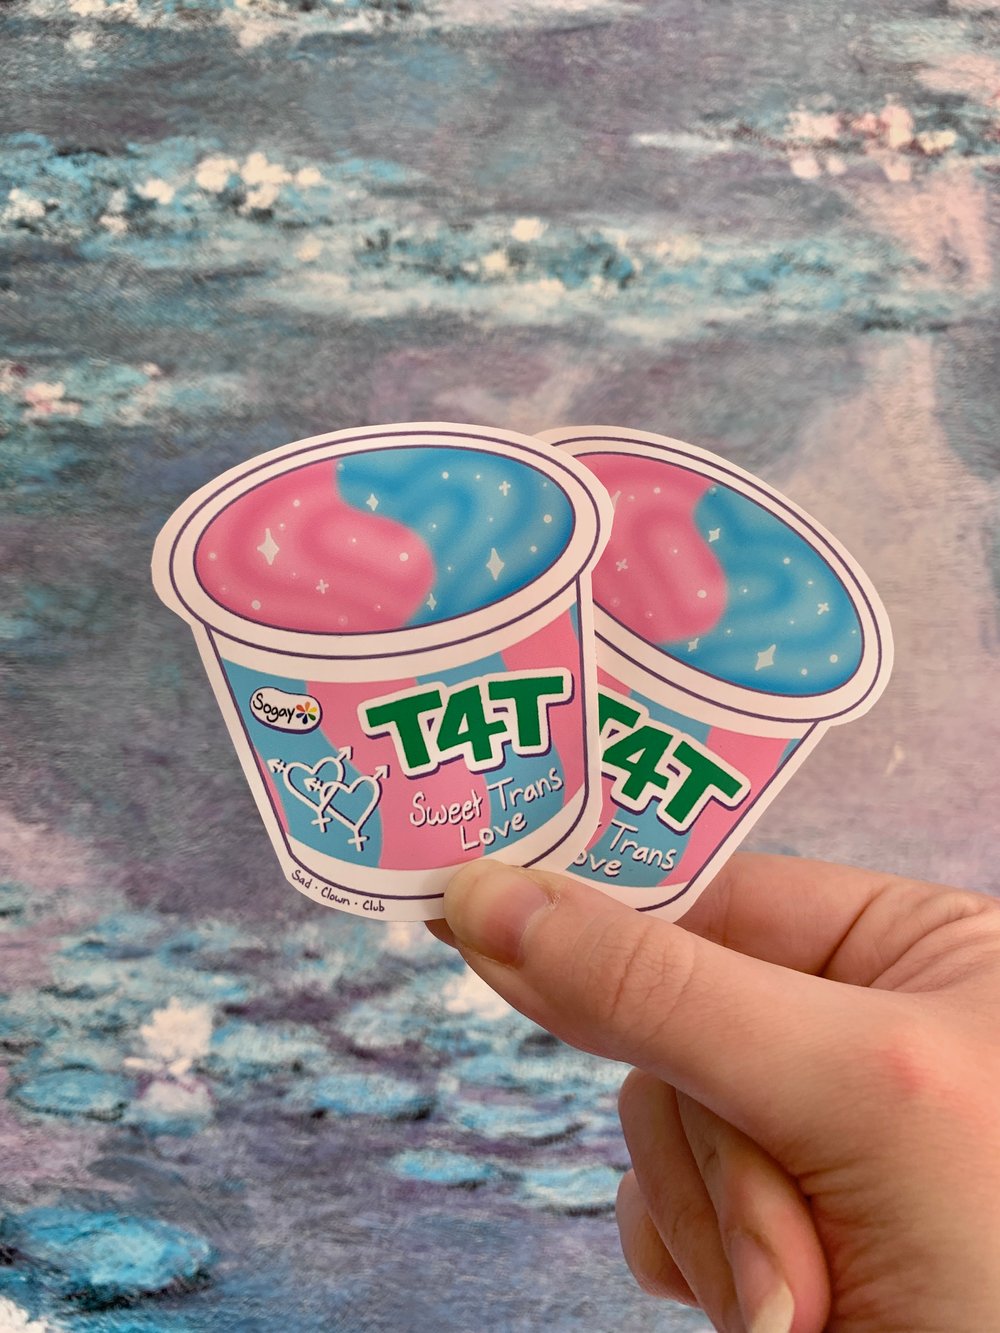 Image of T4T Yogurt Stickers